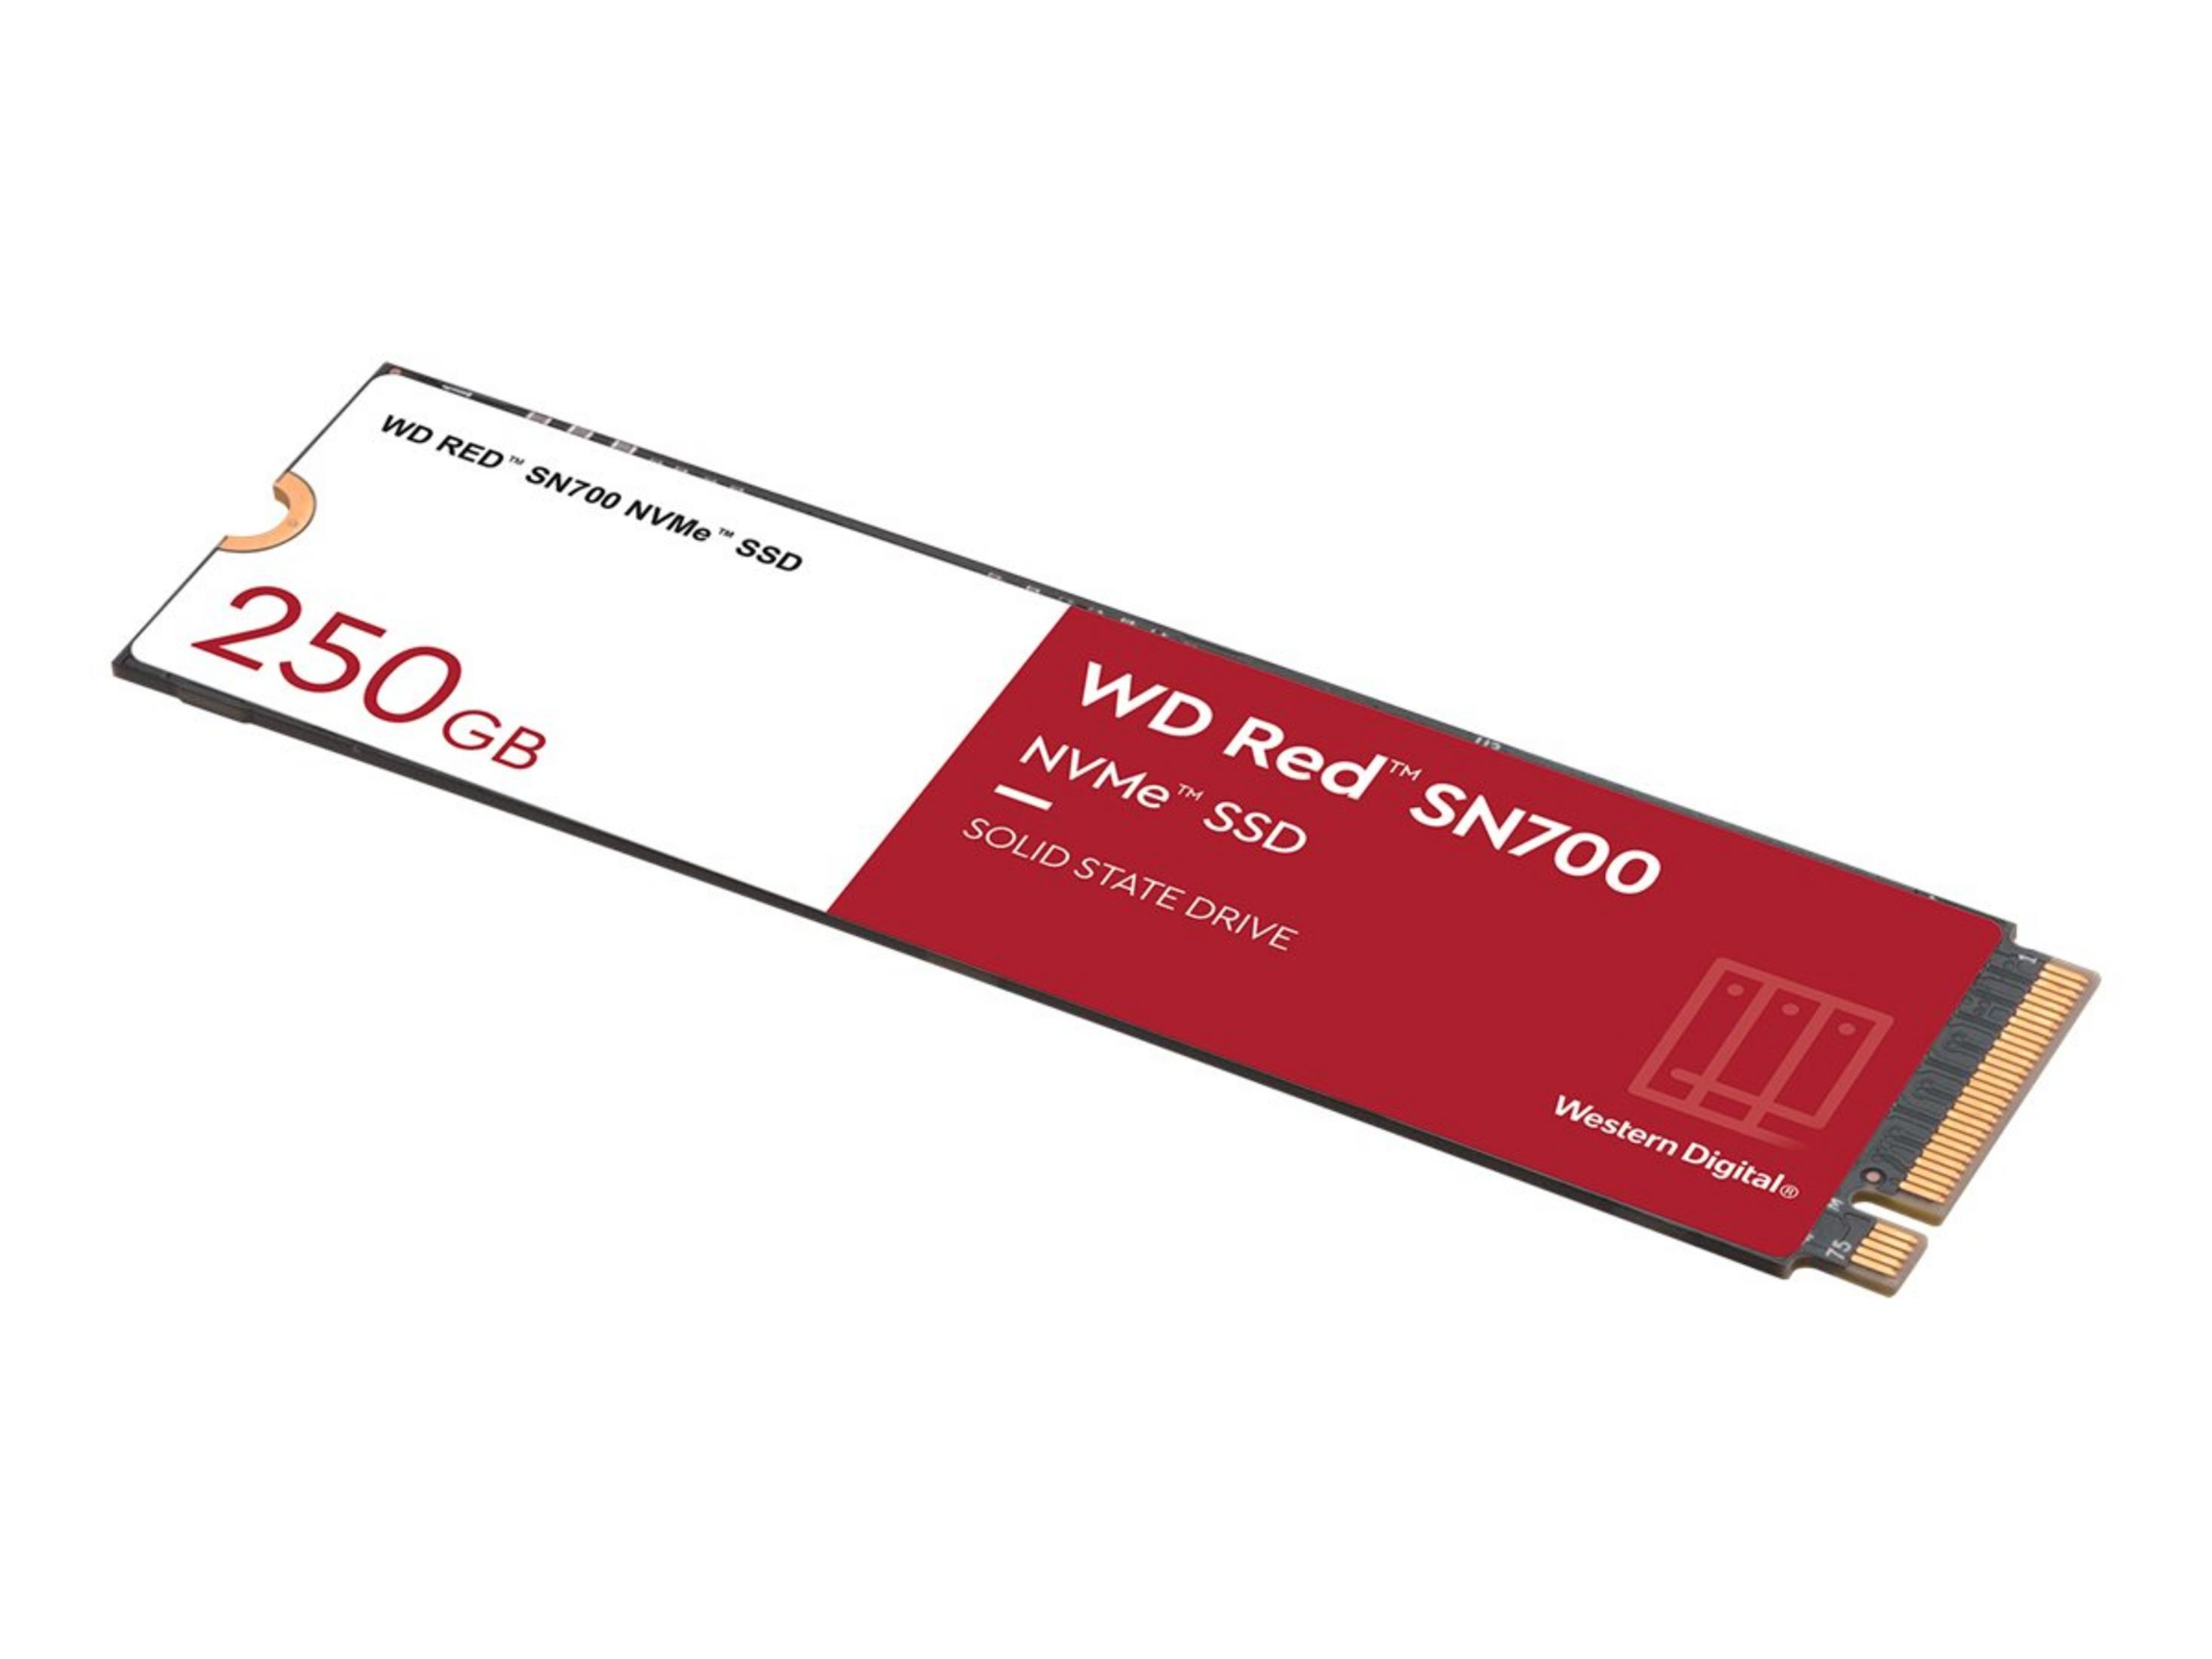 SSD 250GB, NVME 250 WD SN700 GB, WDS250G1R0C SSD, intern RED